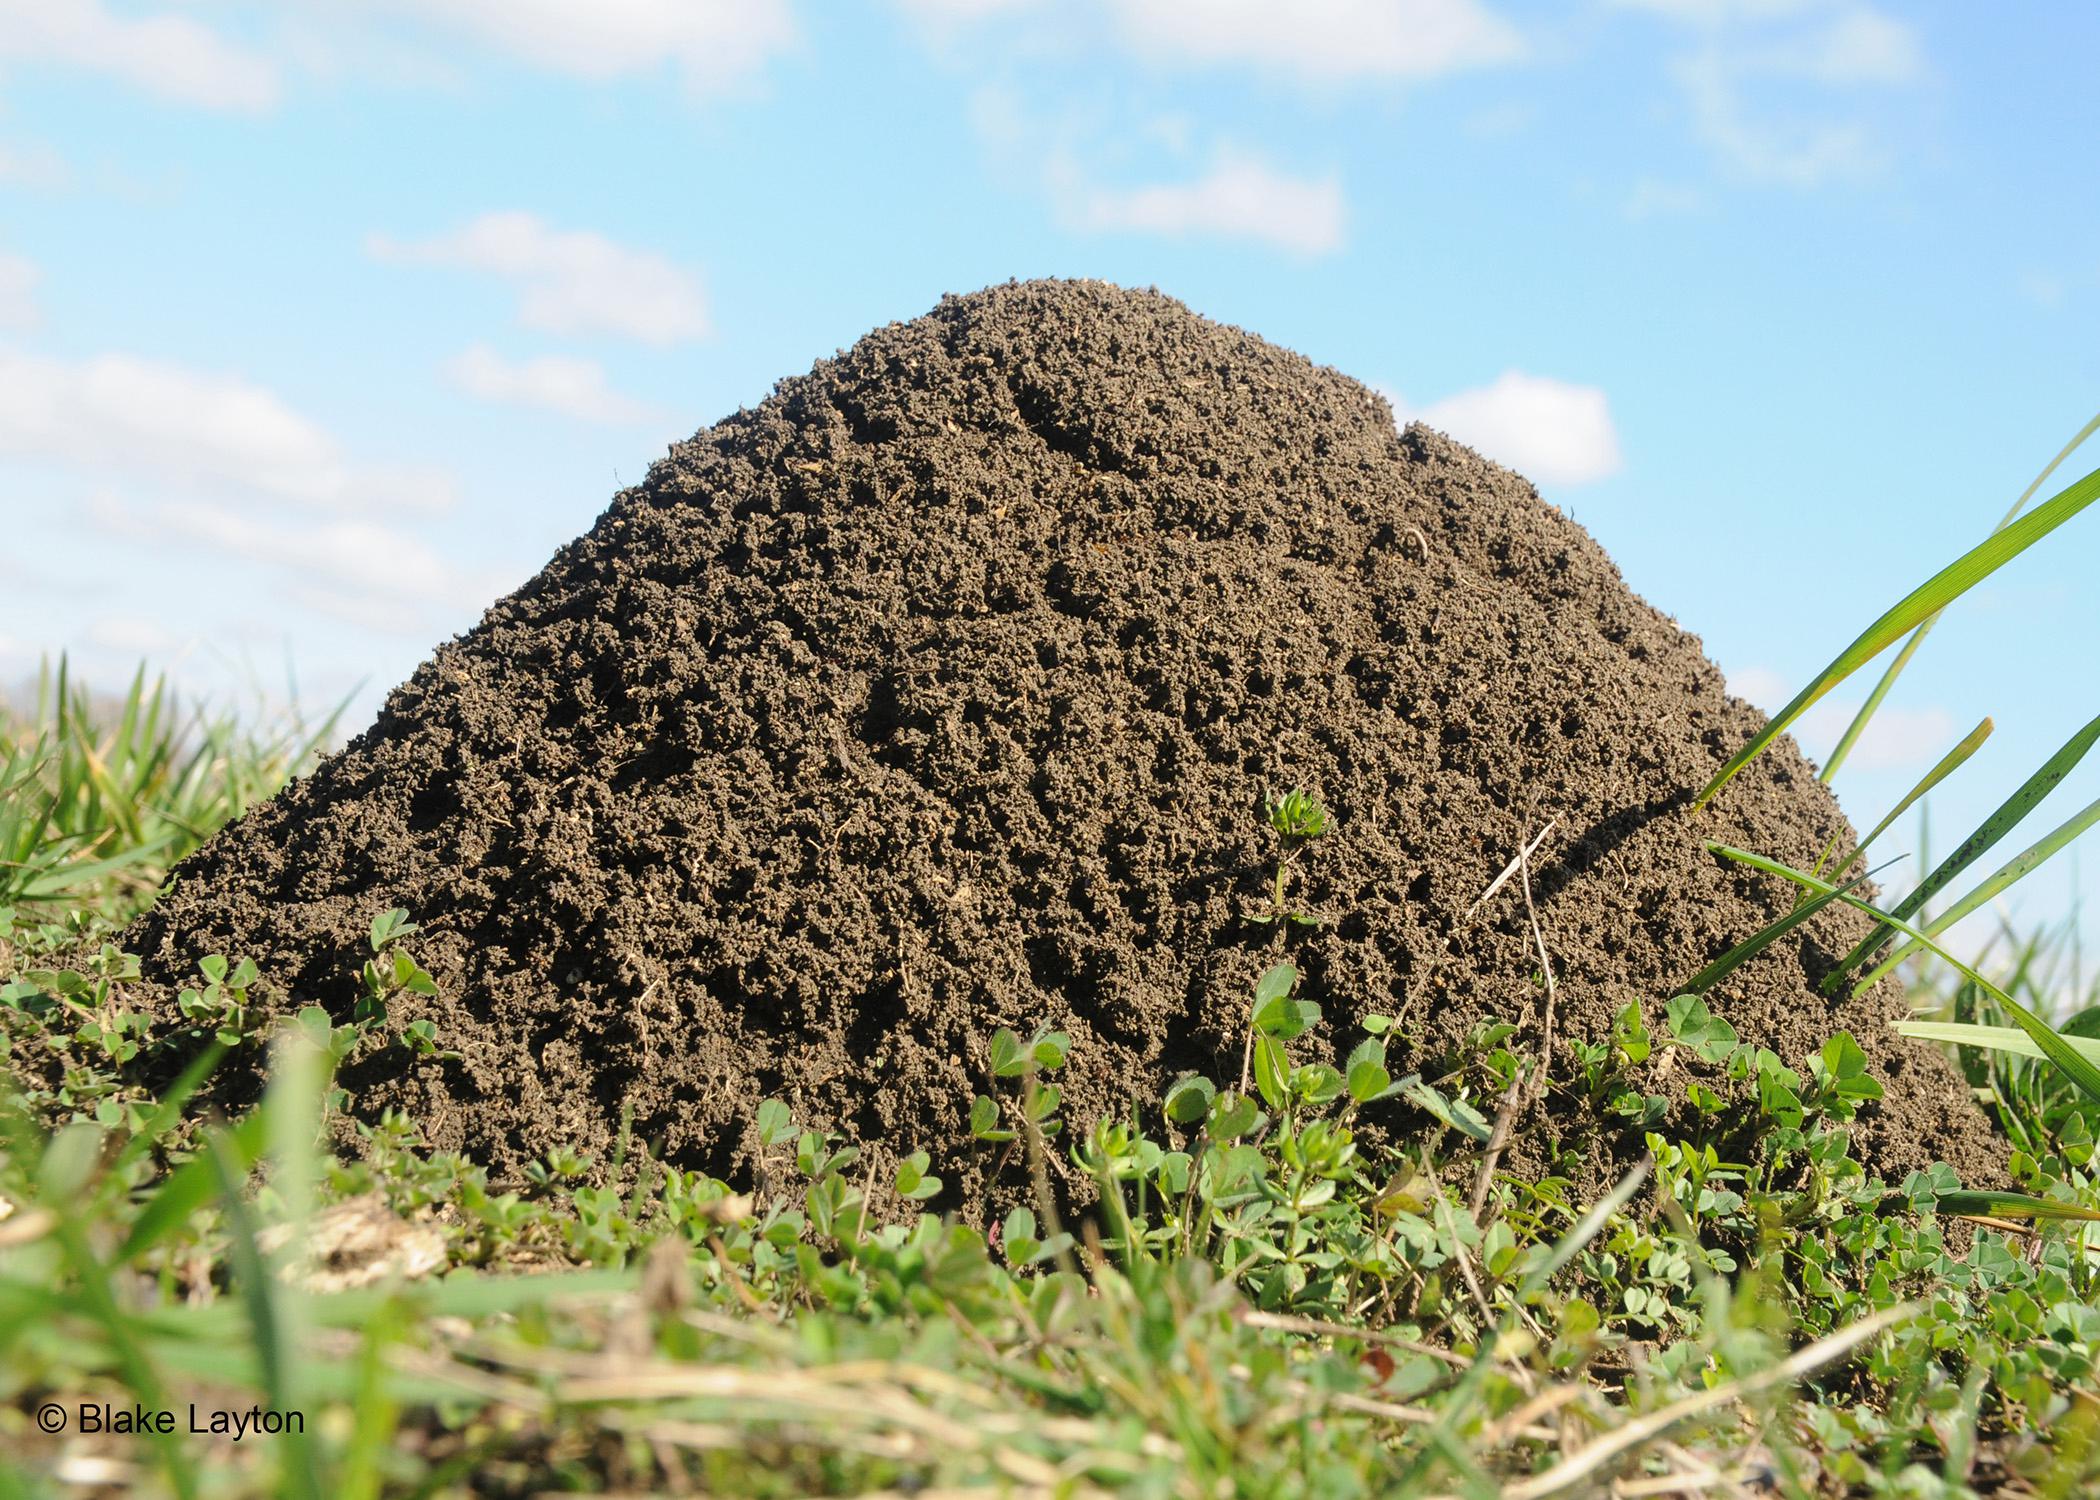 A closeup of a fire ant mound.